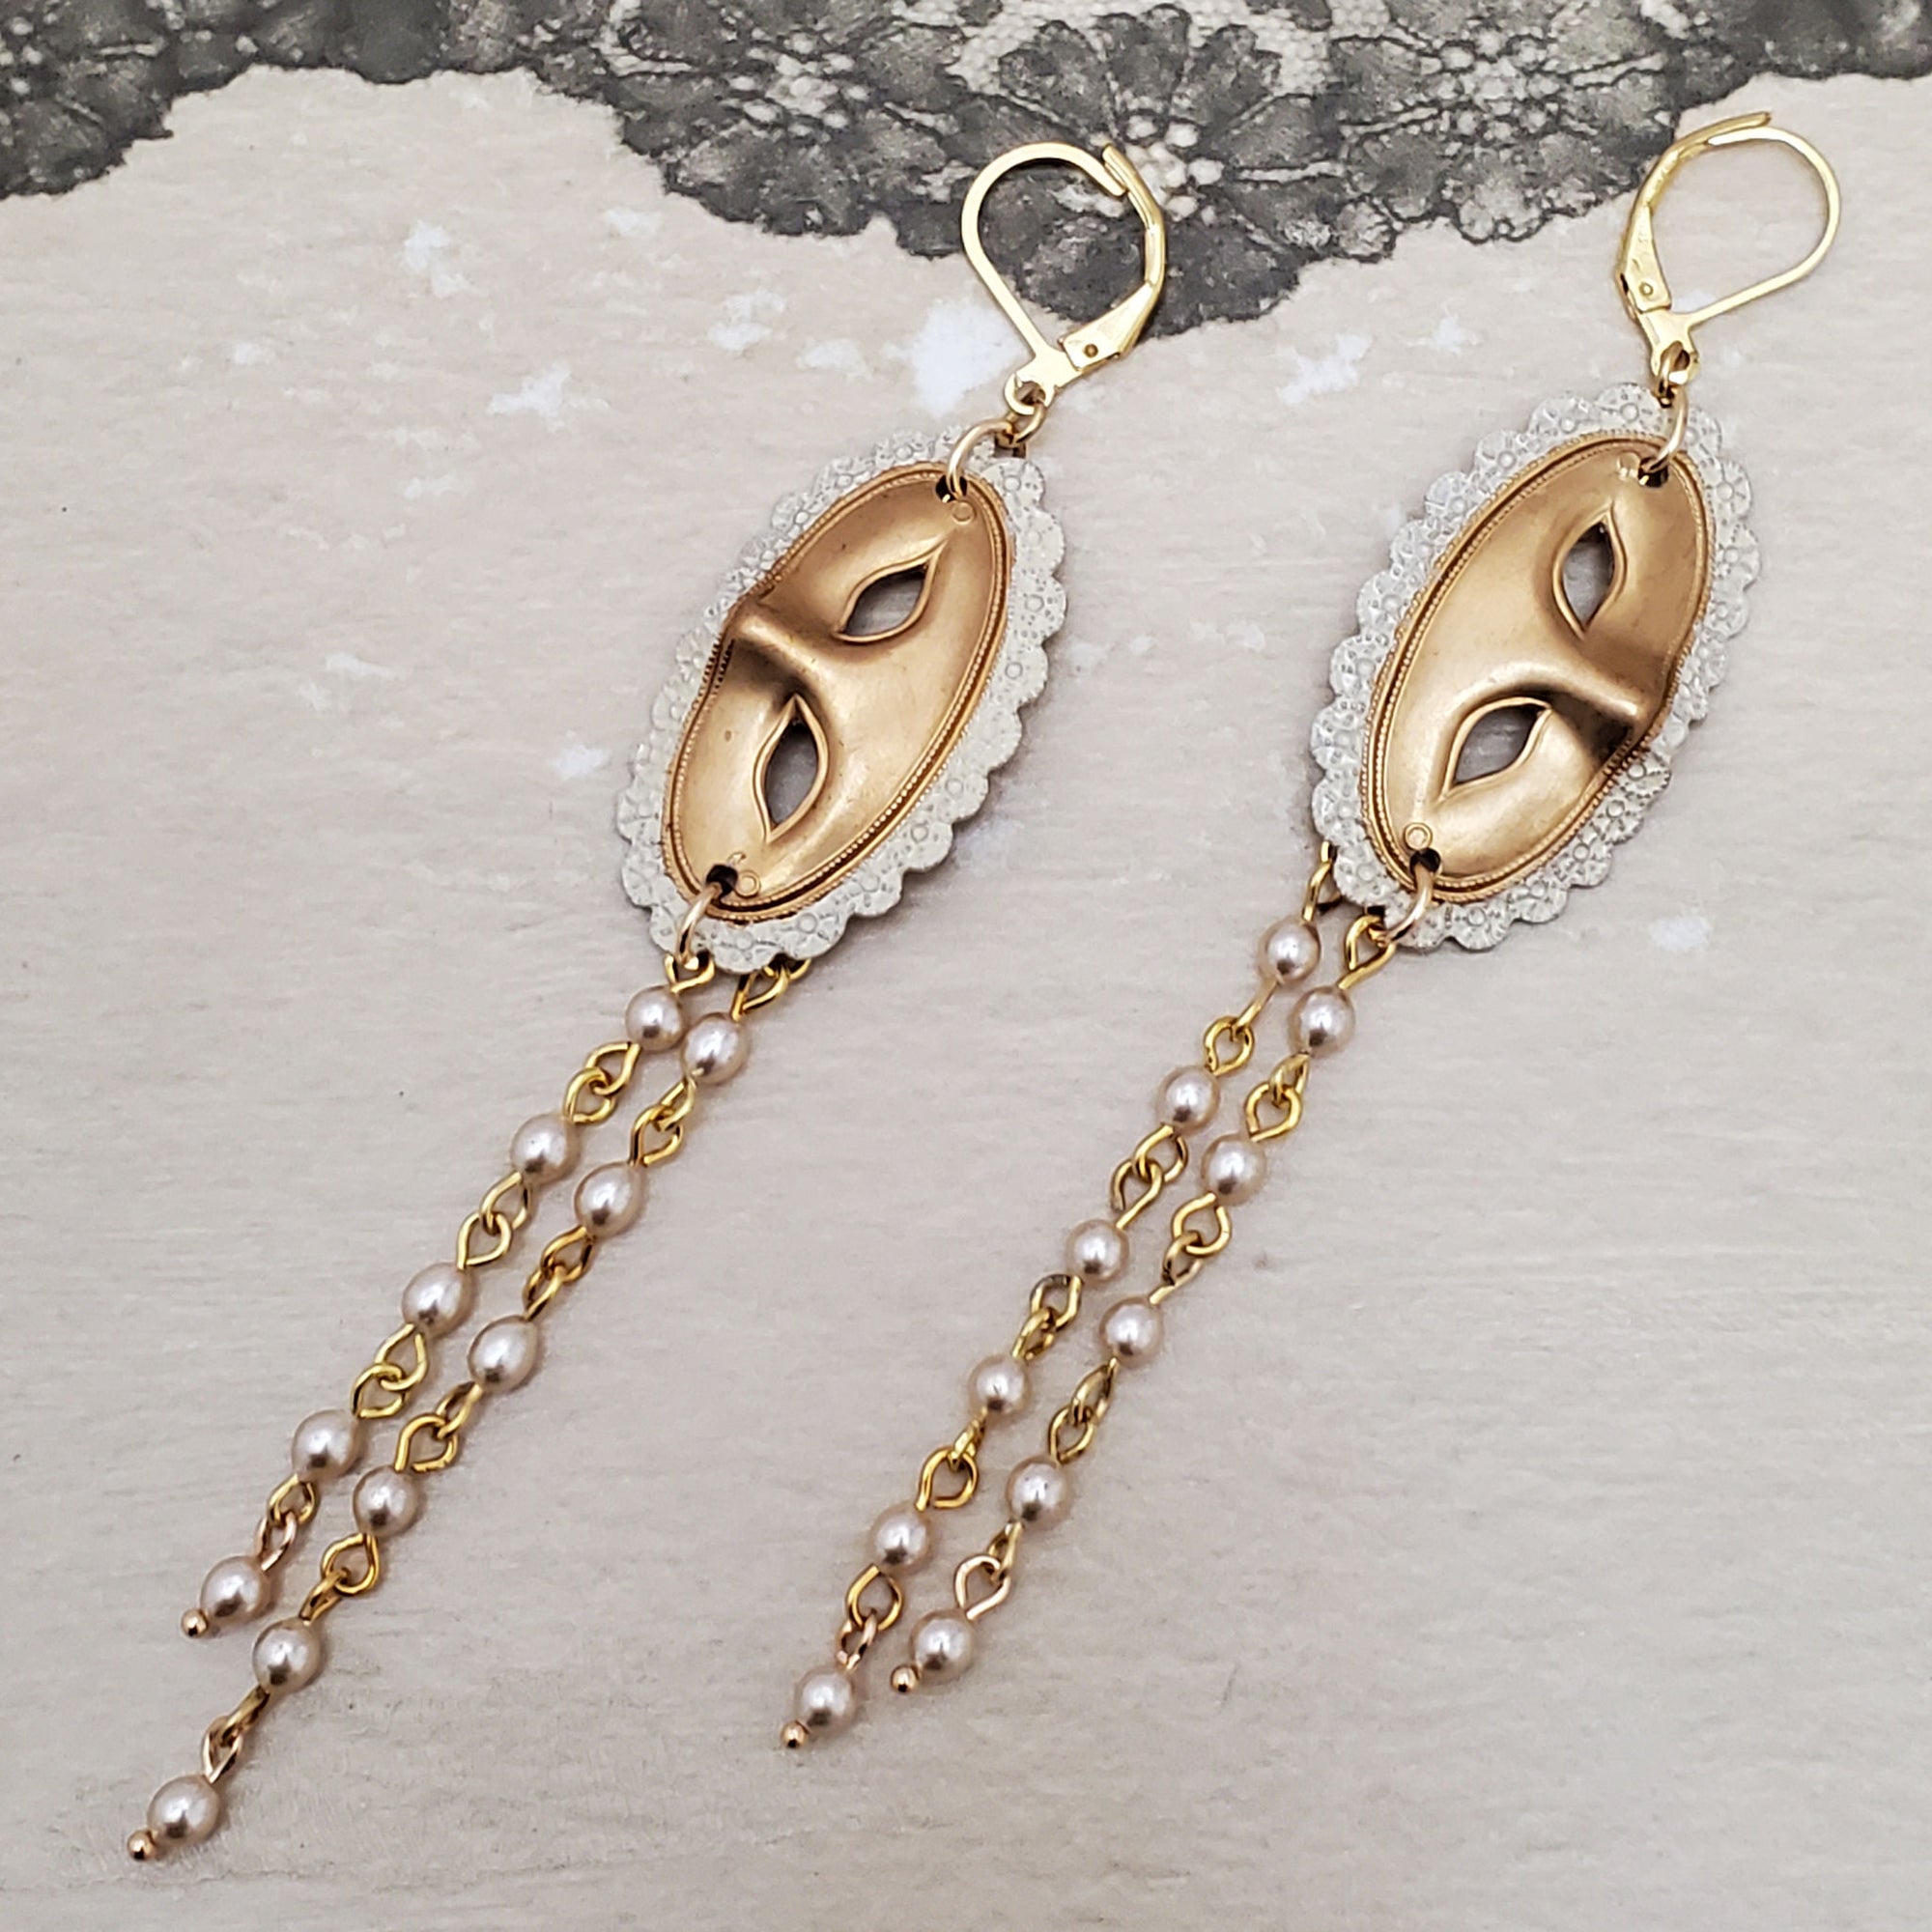 Masquerade mask earrings